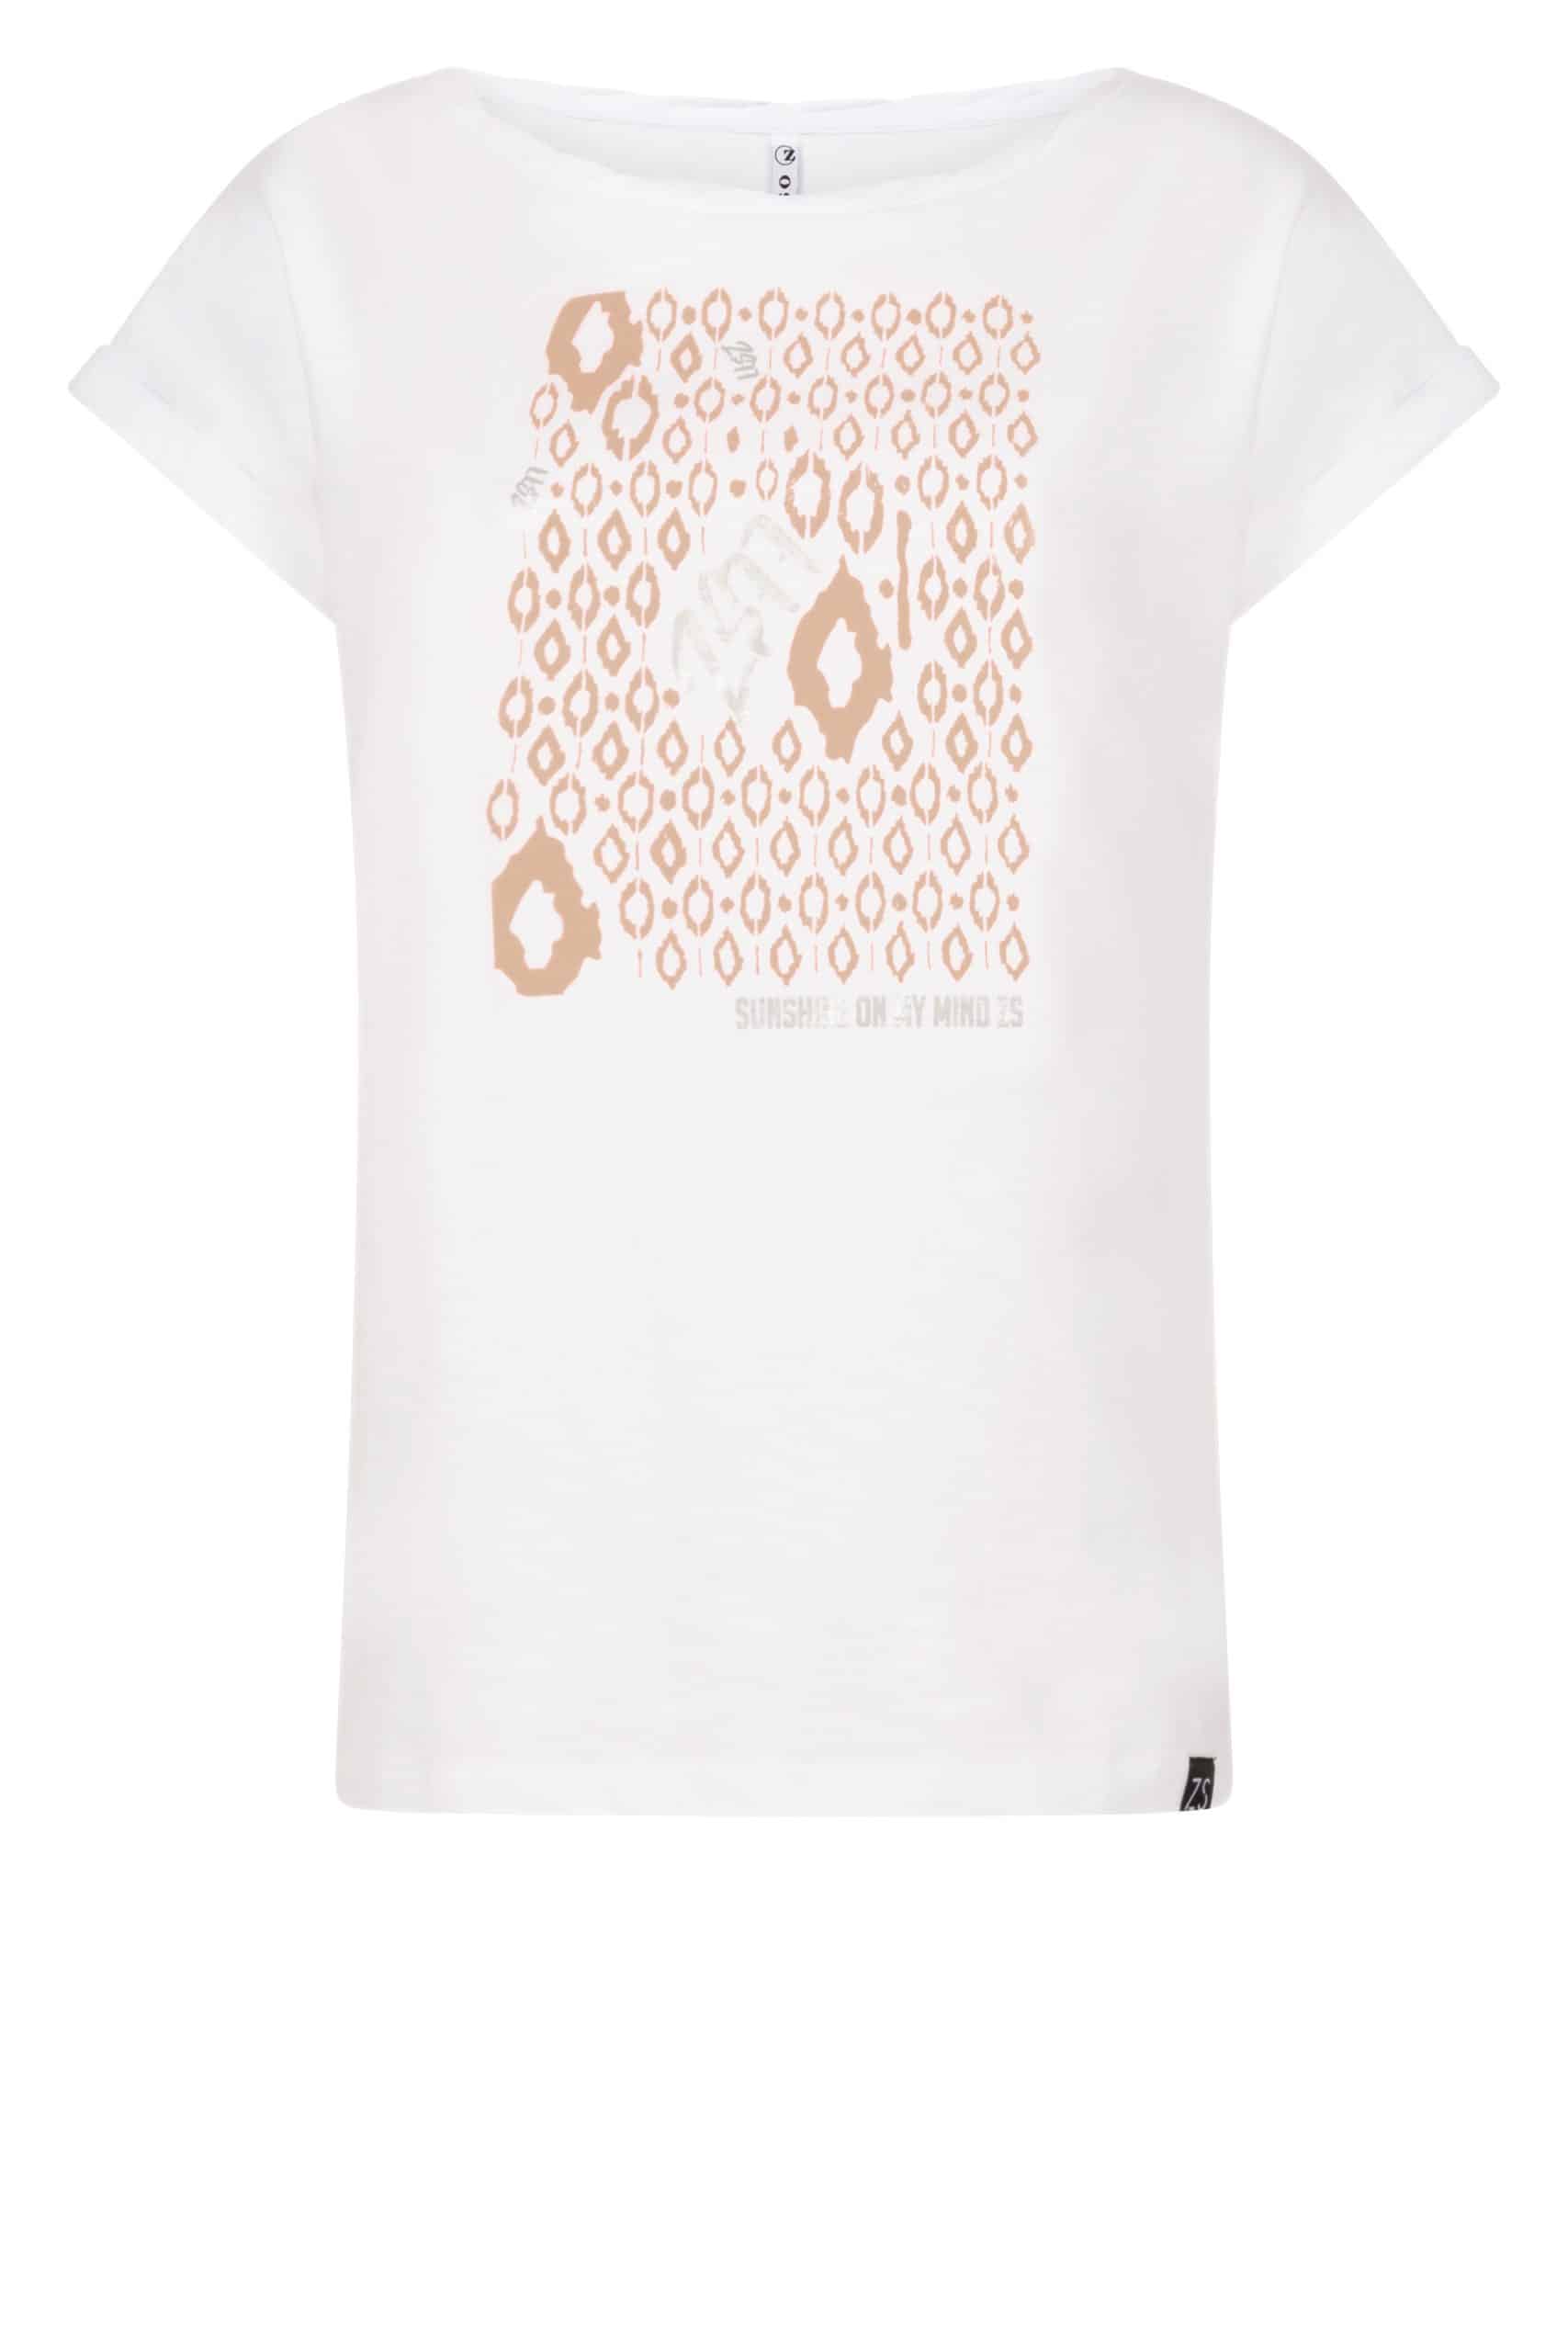 Zoso 223 Rachel T-Shirt With Print Sand